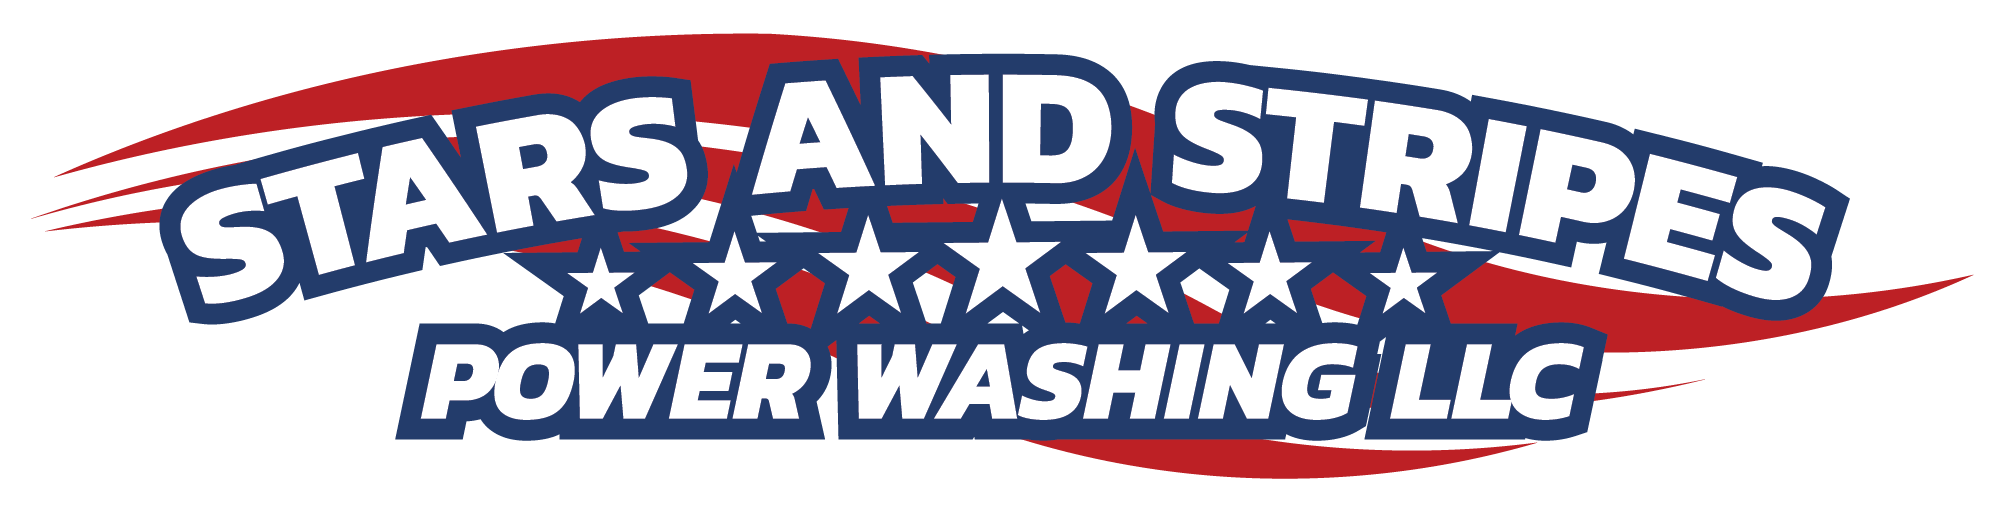 Stars and Stripes Power Washing LLC Logo